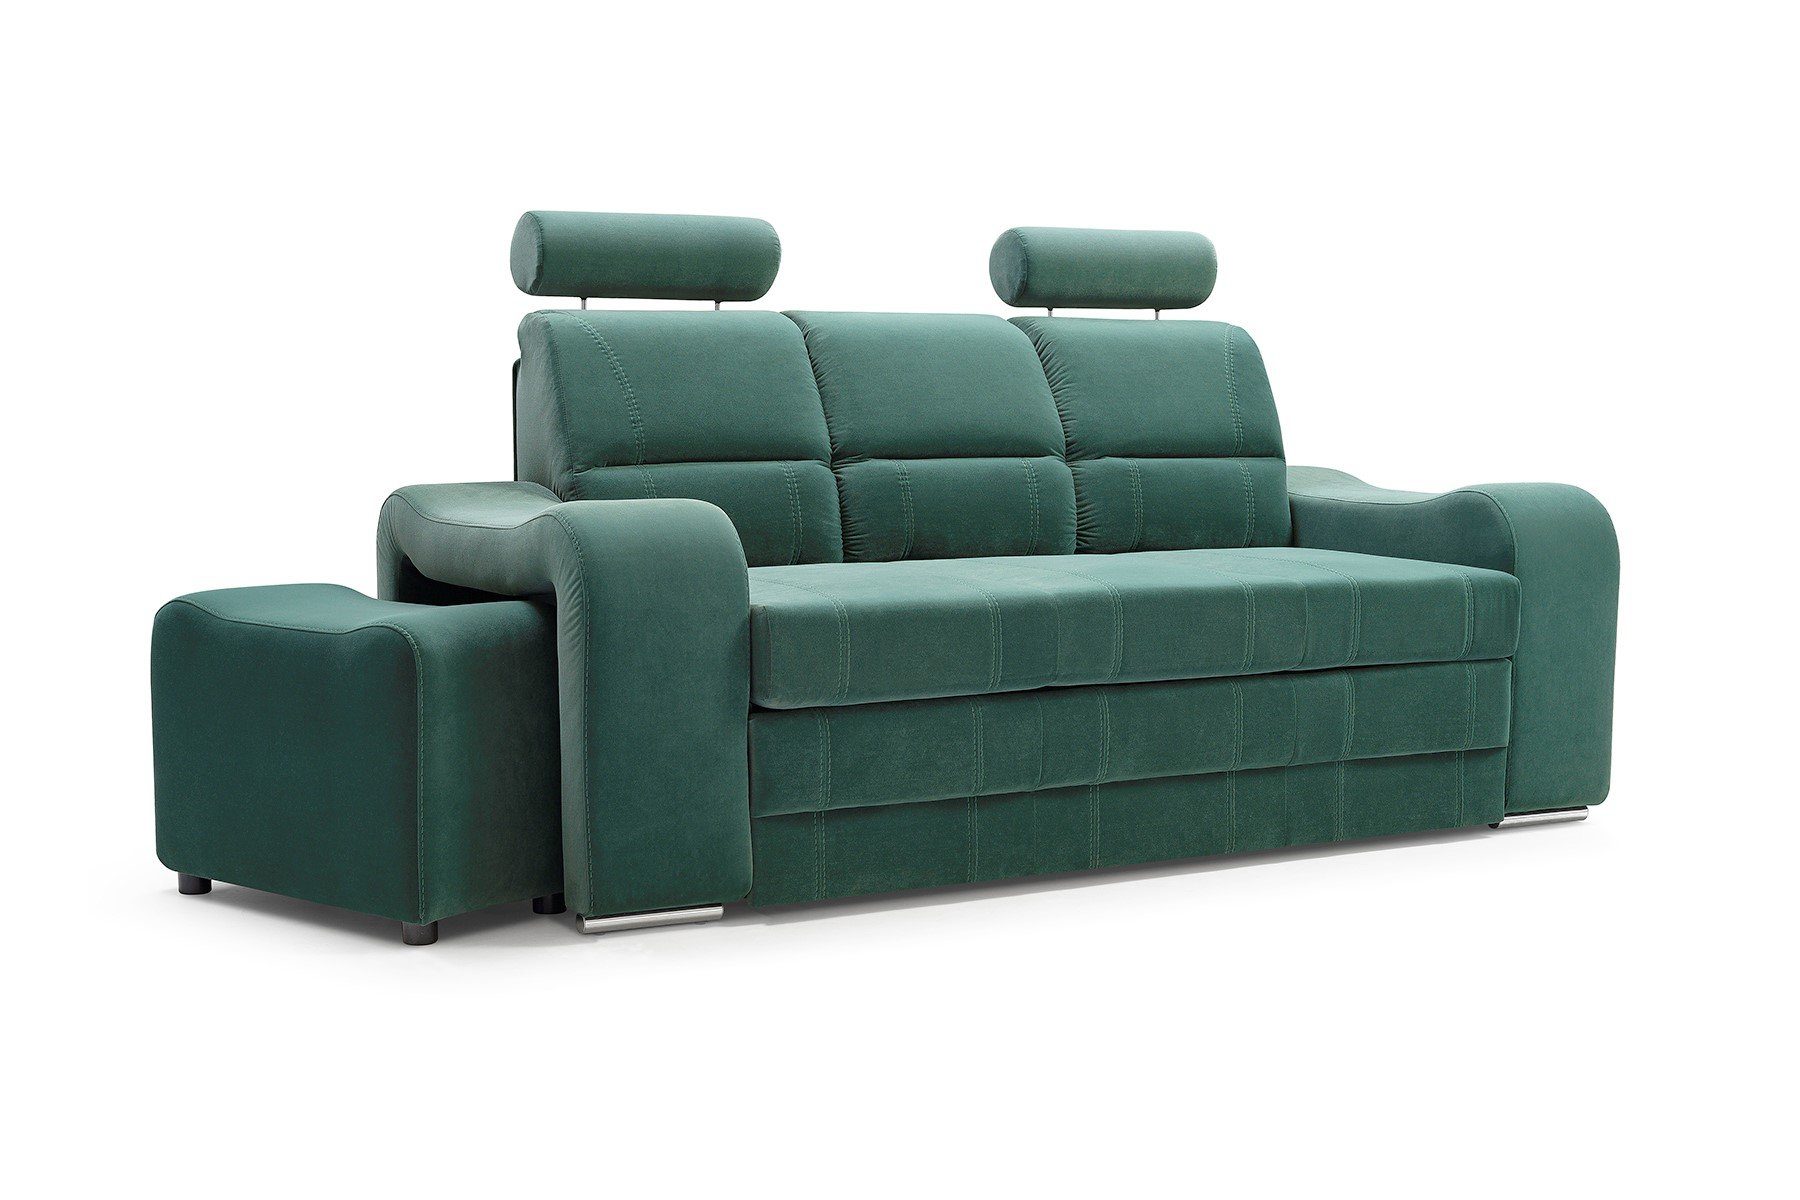 Venus Grün 3-Sitzer Funktionales mit Hocker Siblo Sofa